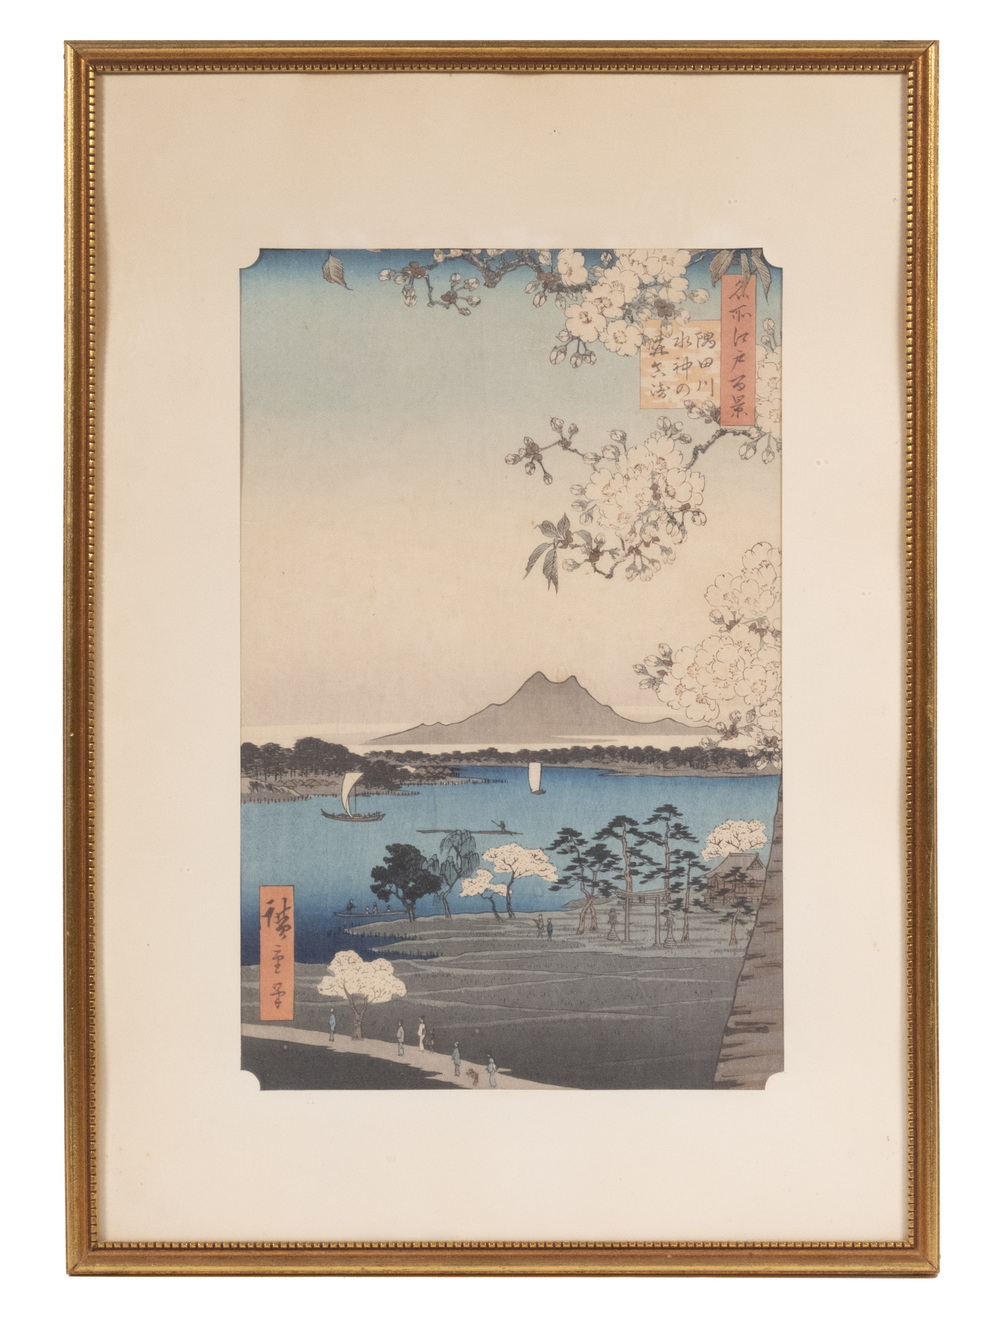 UTAGAWA HIROSHIGE (1797-1858) "Cherry